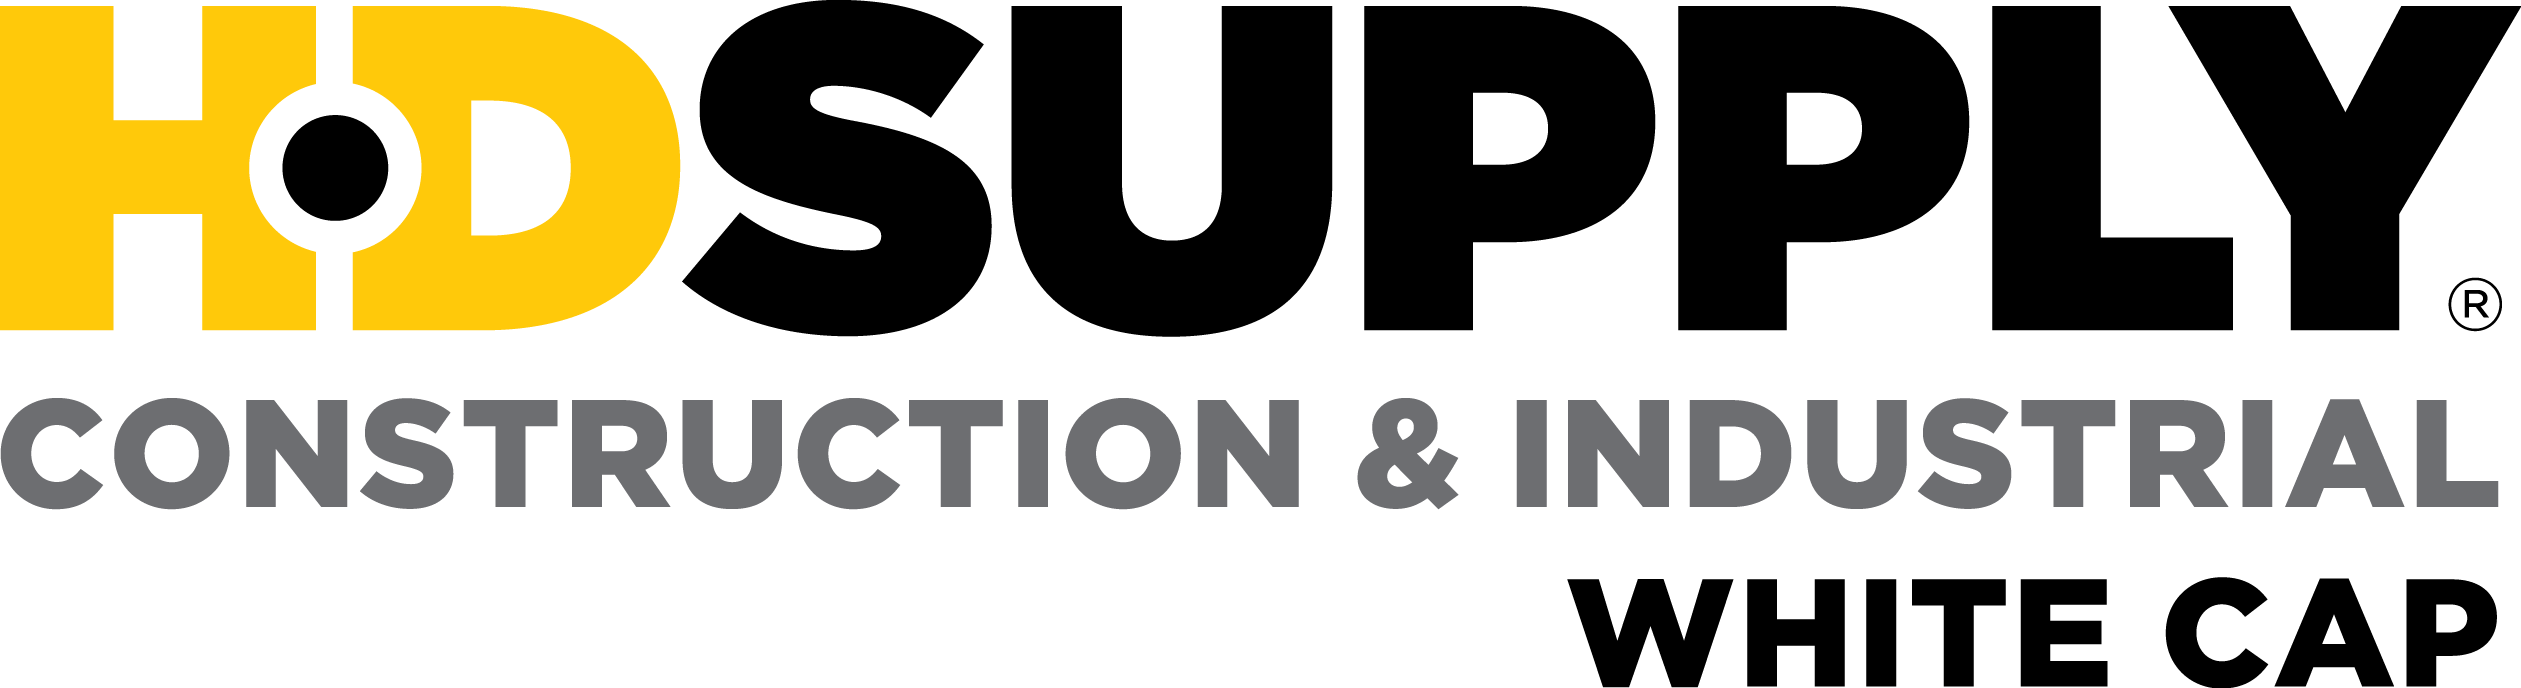 HD Supply White Cap Logo - LogoDix